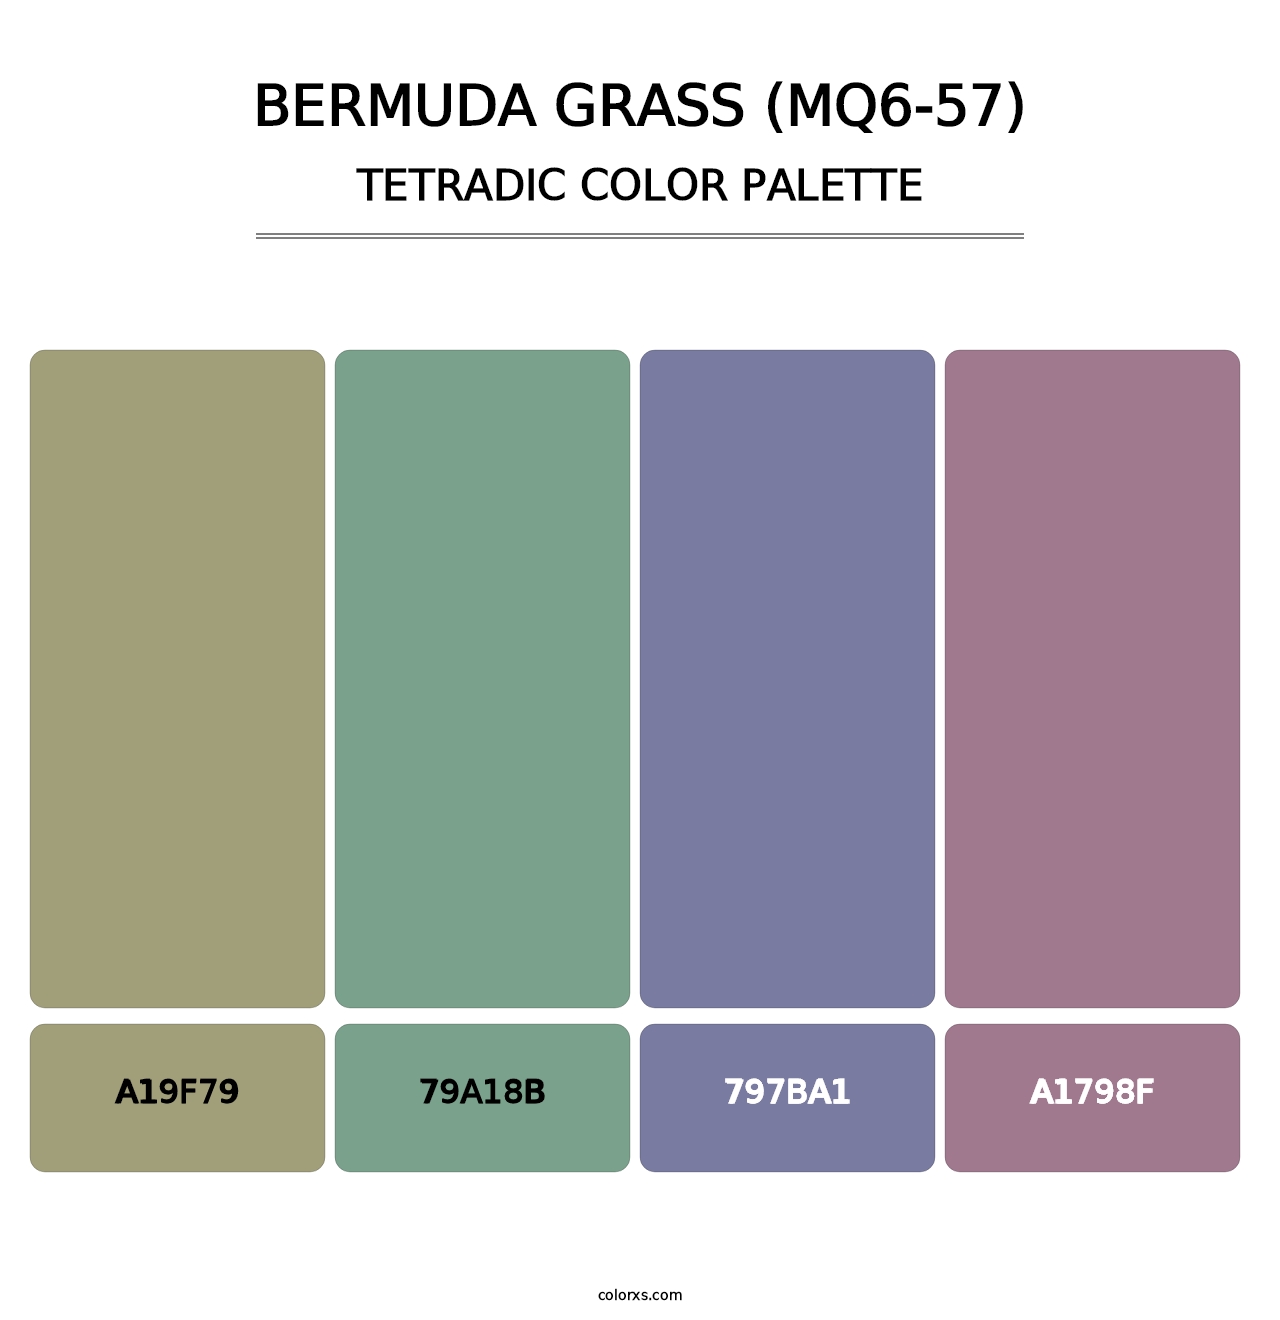 Bermuda Grass (MQ6-57) - Tetradic Color Palette